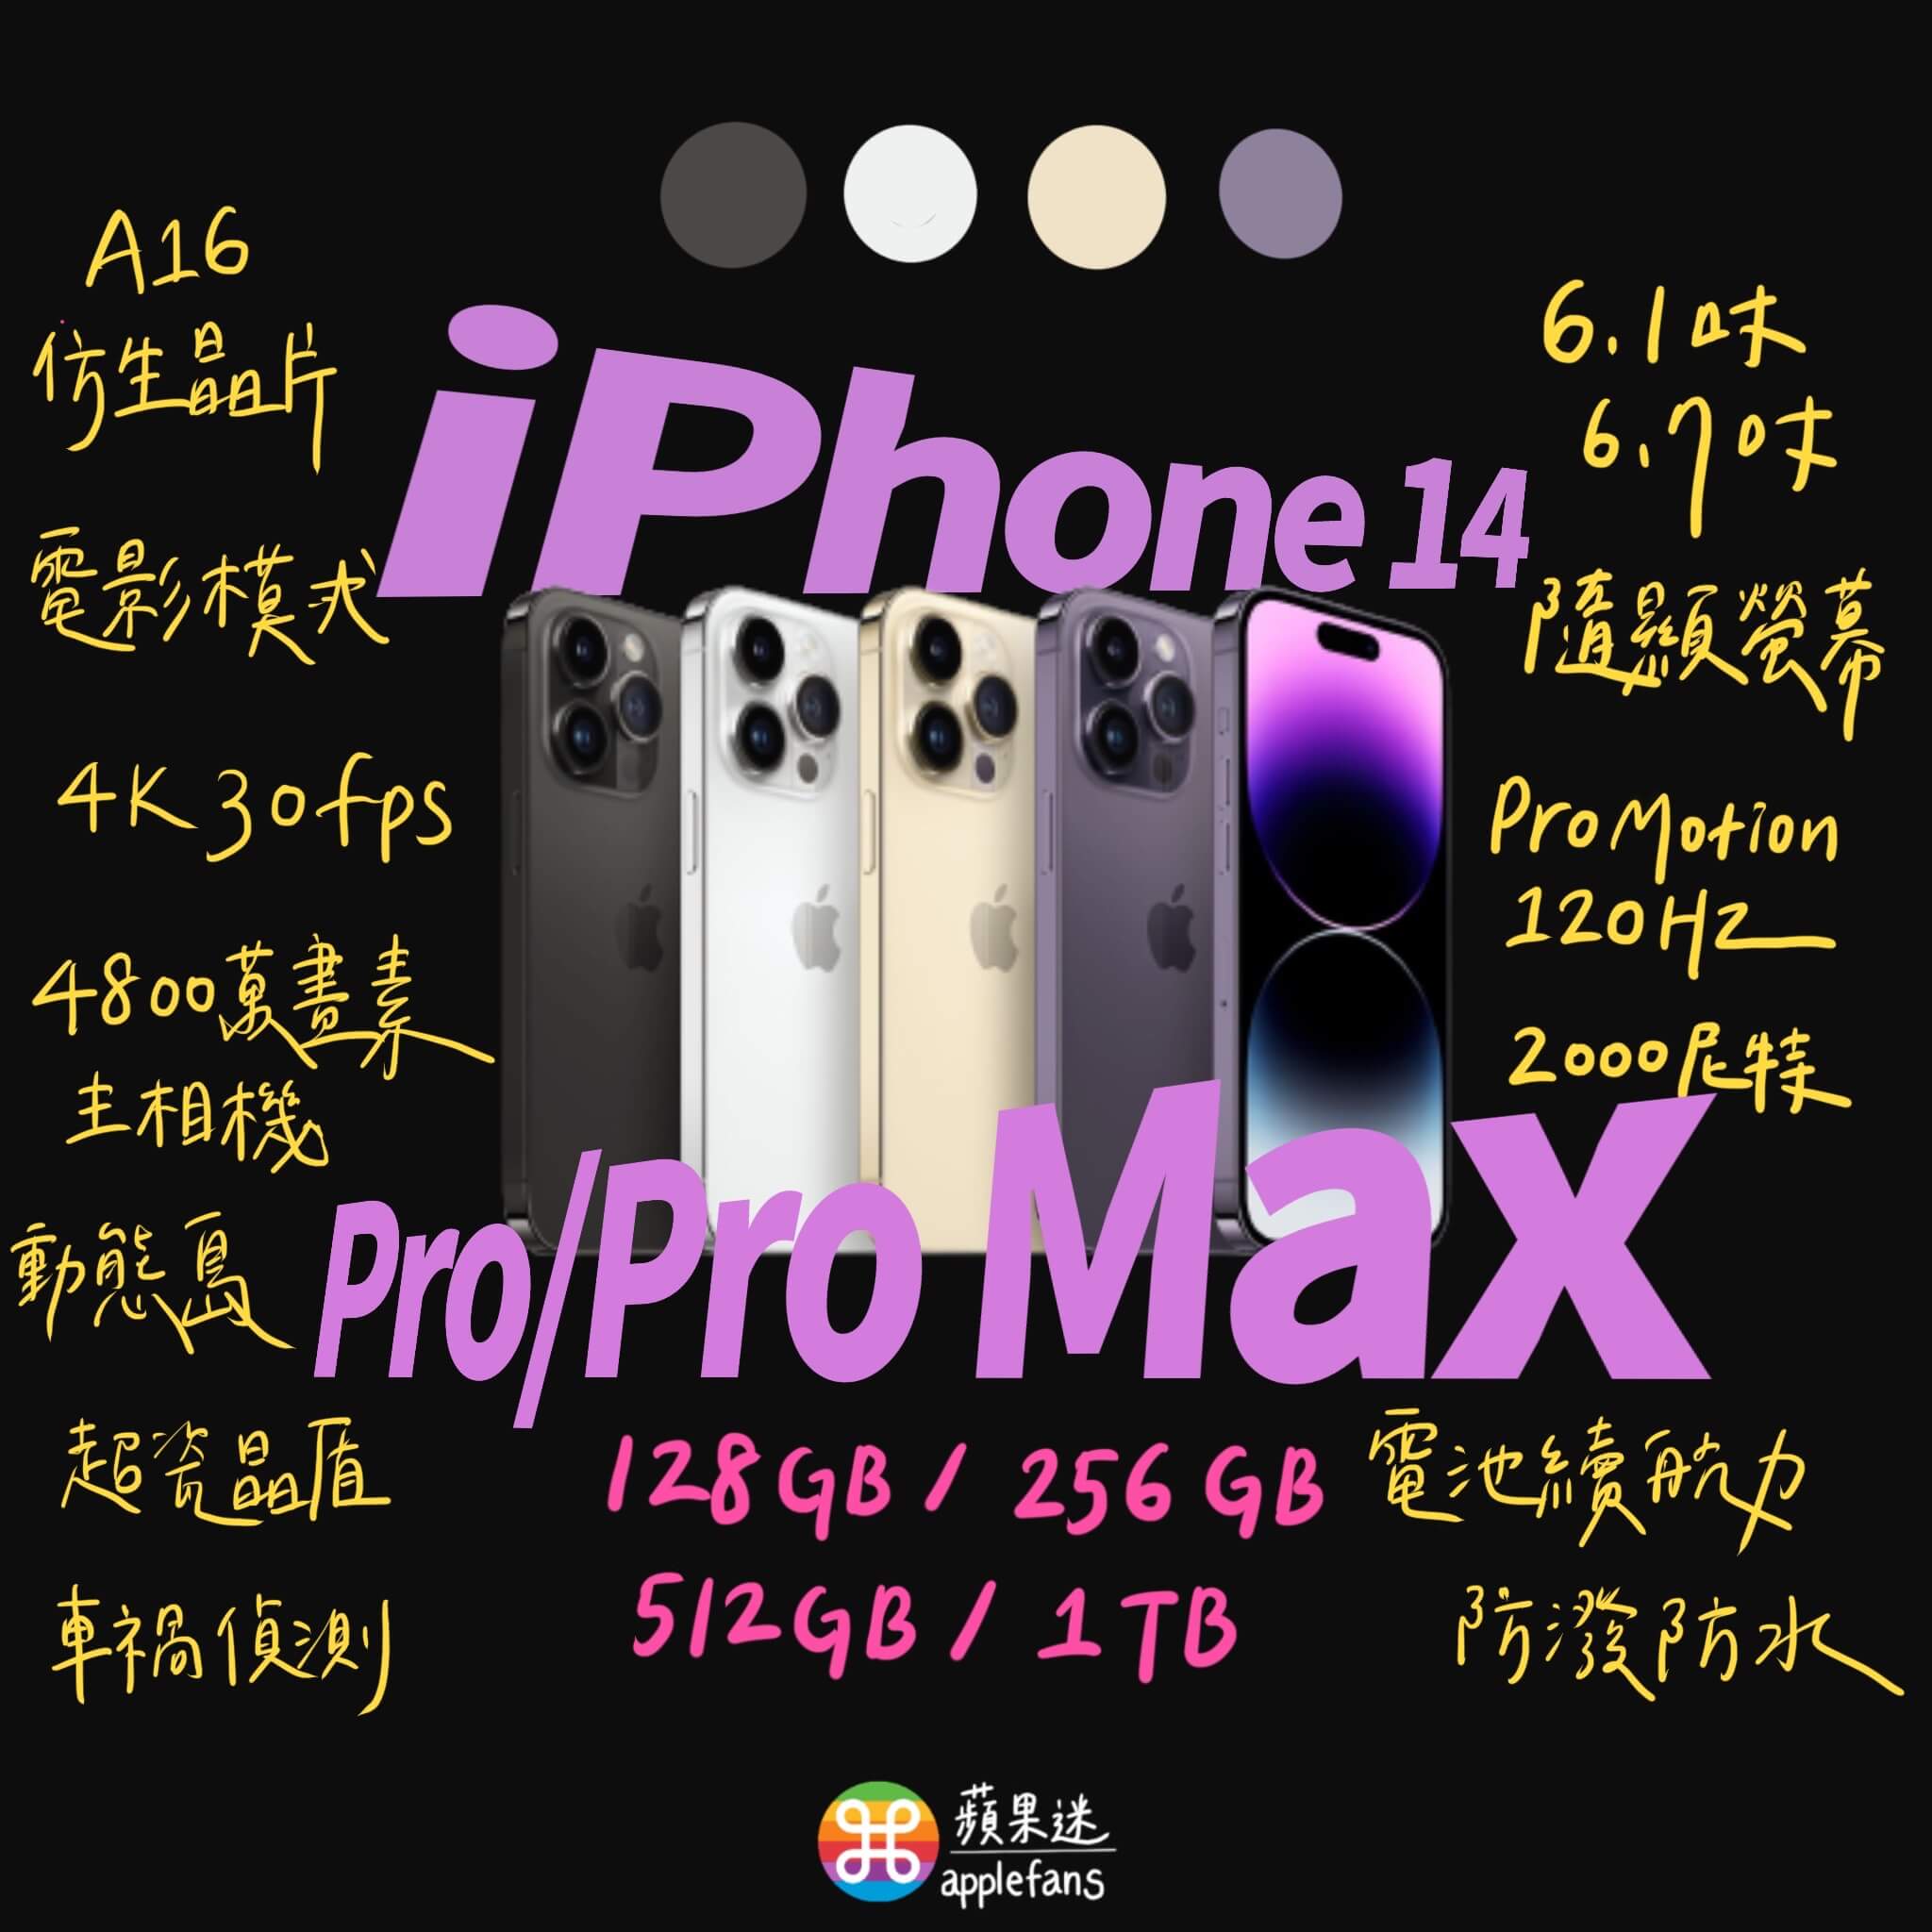 Apple Event iPhone 14 Pro